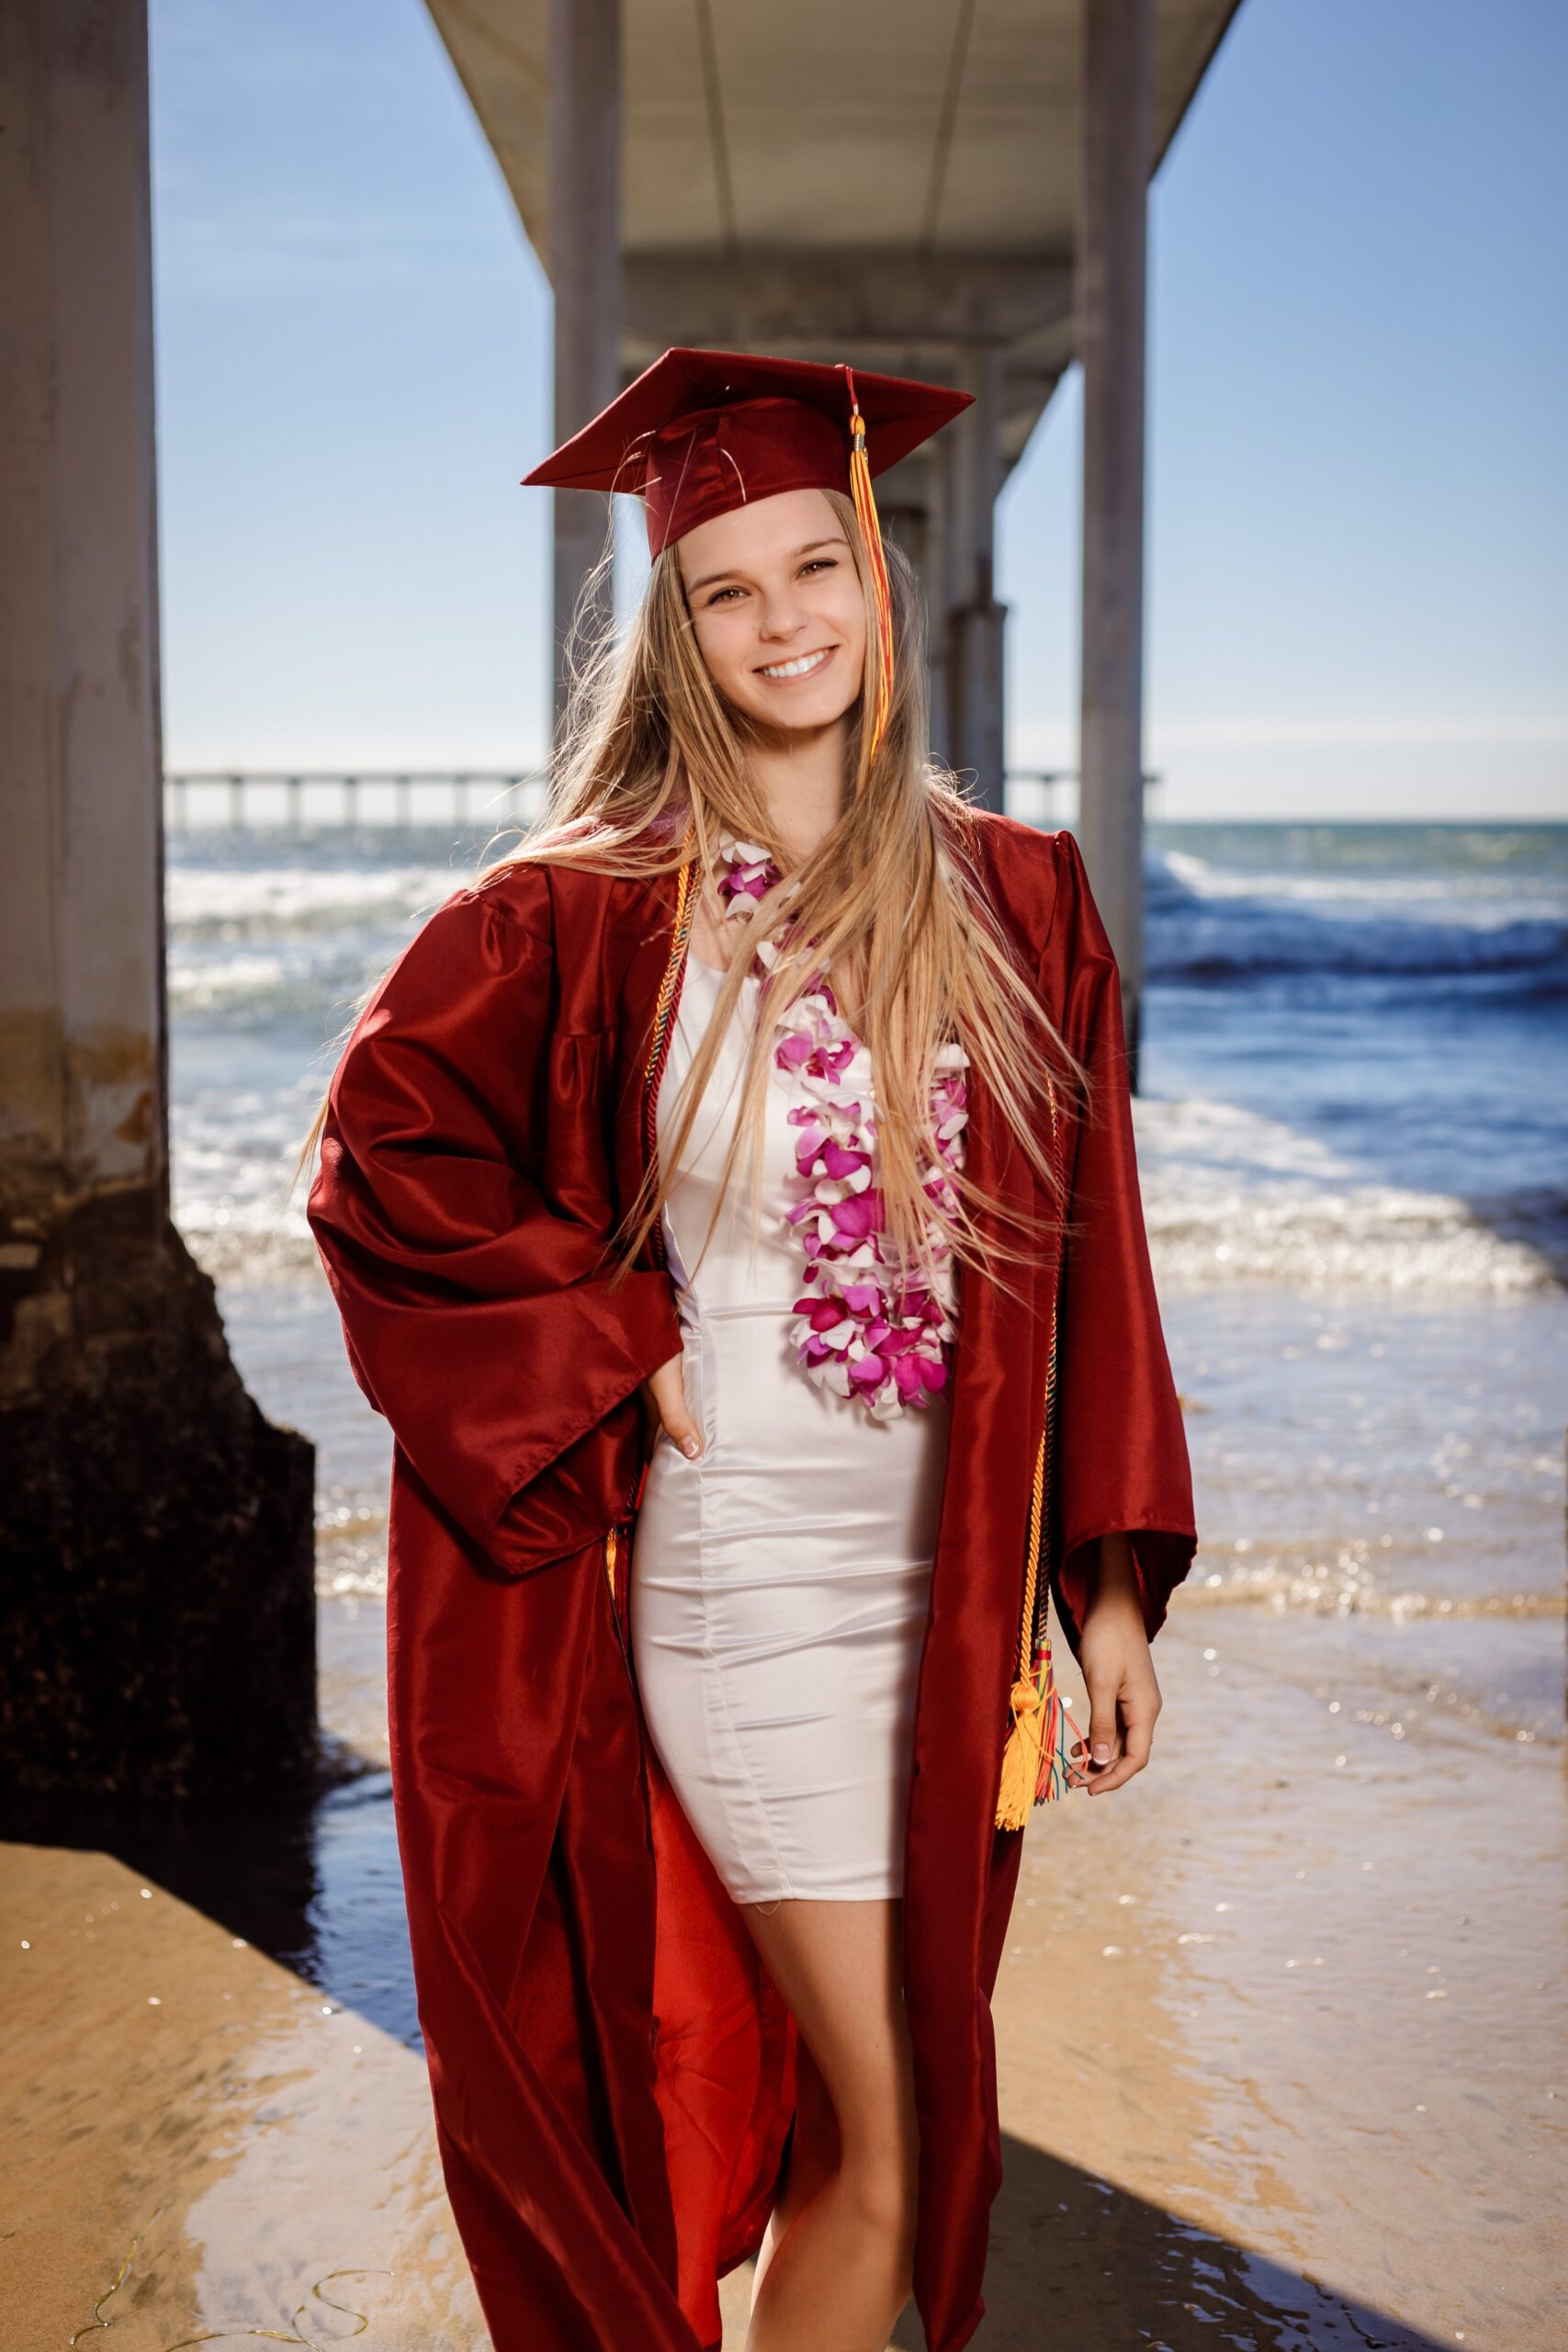 Point Loma High School Graduation Day - Senior Portrait Photo Session at Ocean Beach Pier, San Diego, California-9.jpg